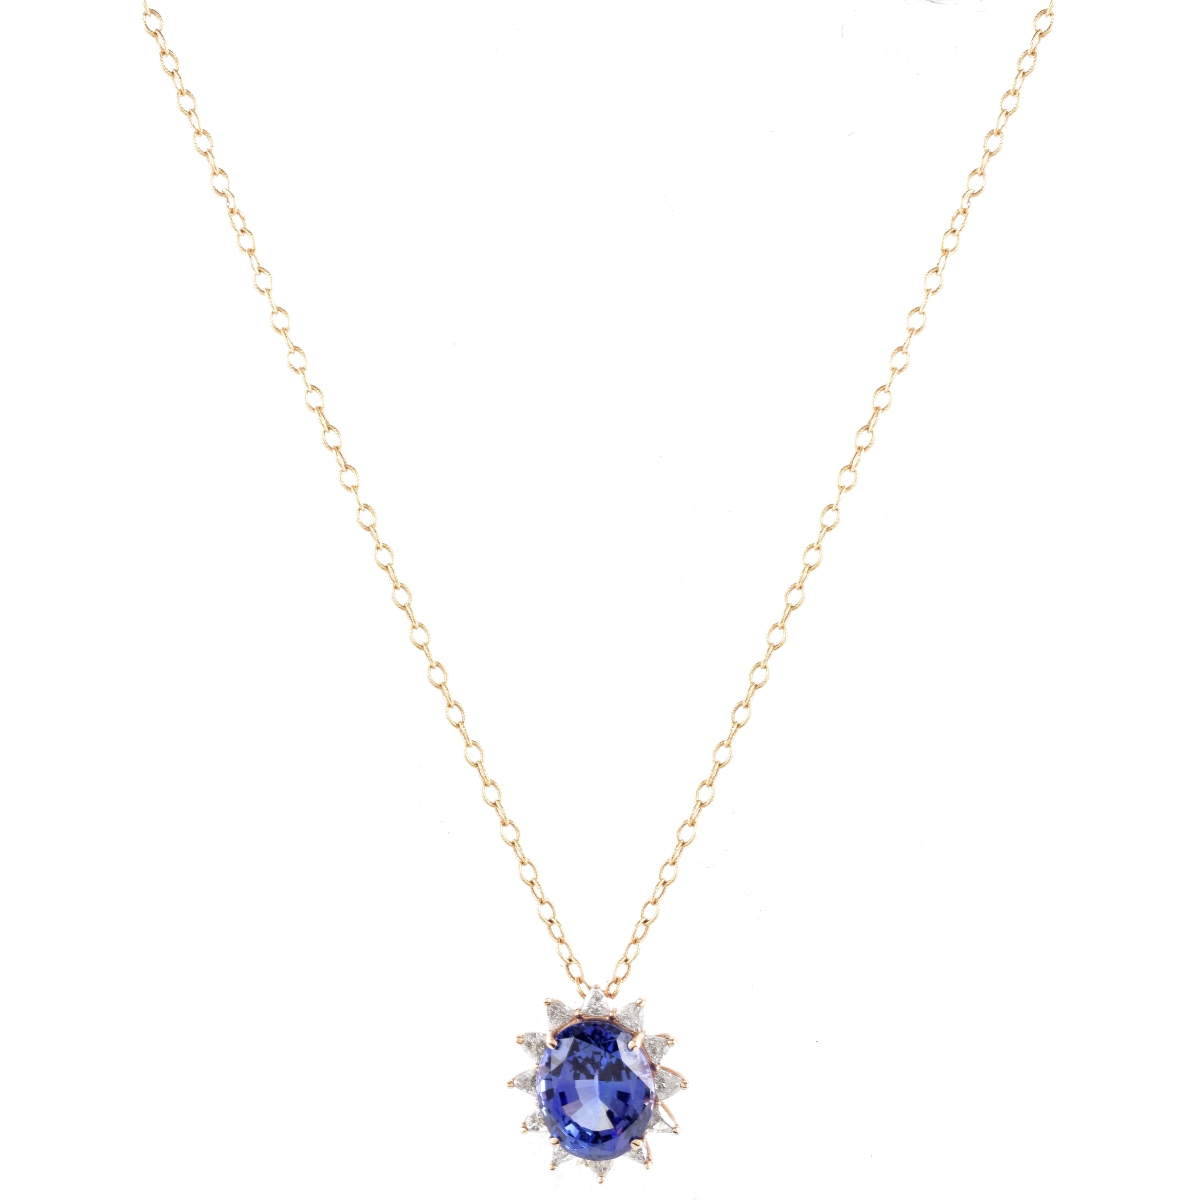 Tanzanite, Diamond and 14K Pendant Necklace